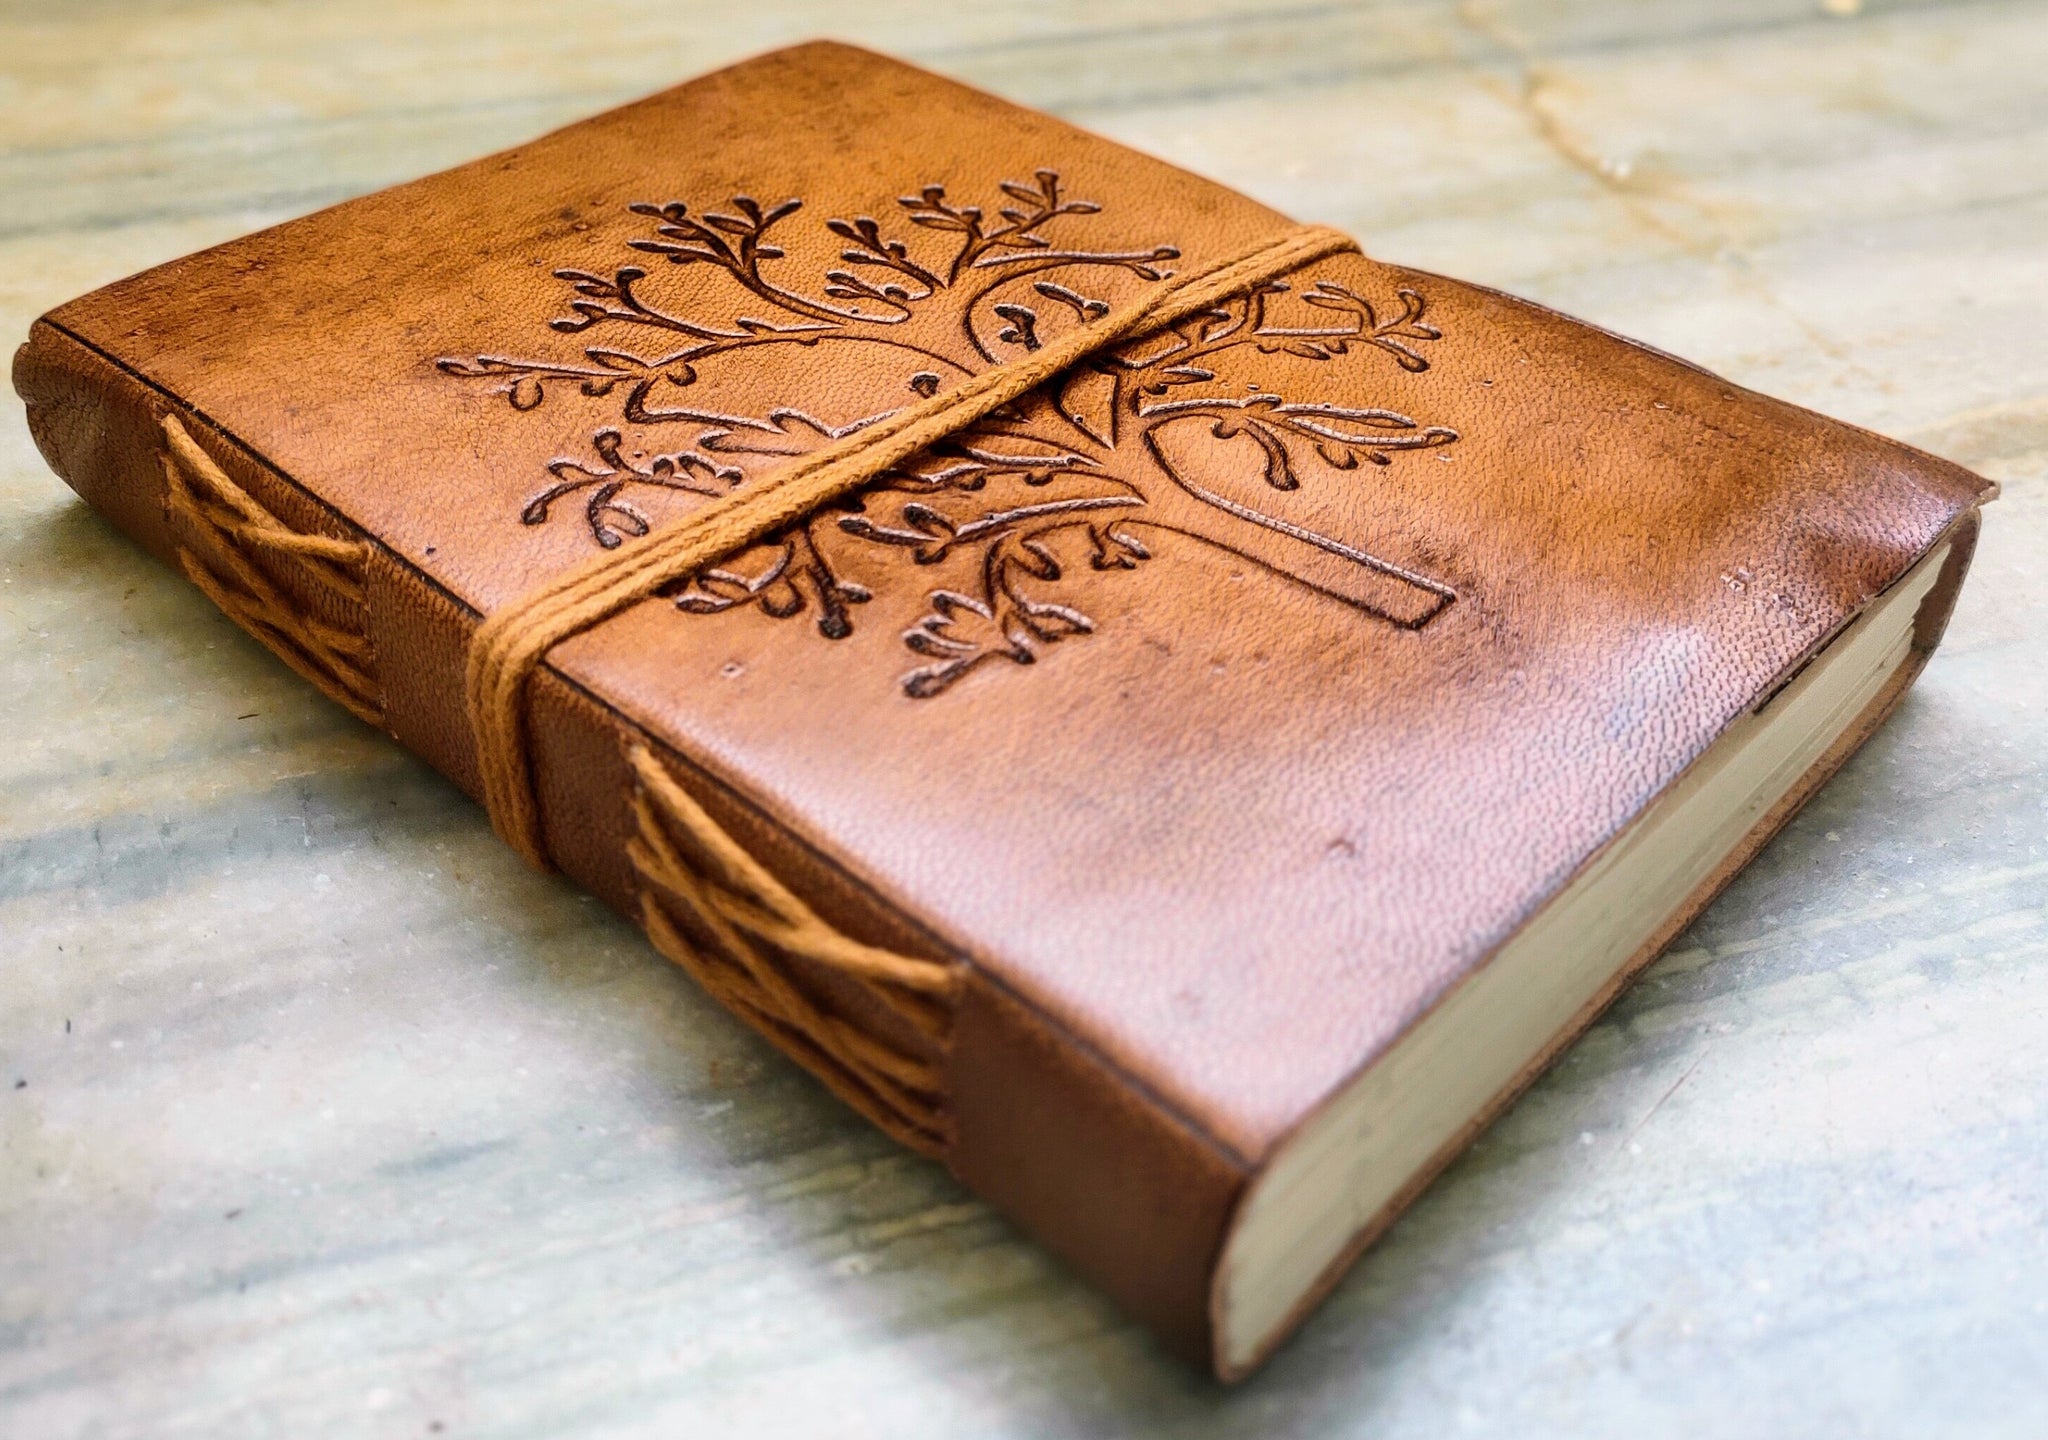 Handmade Leather Journal Diary Notebook for Men